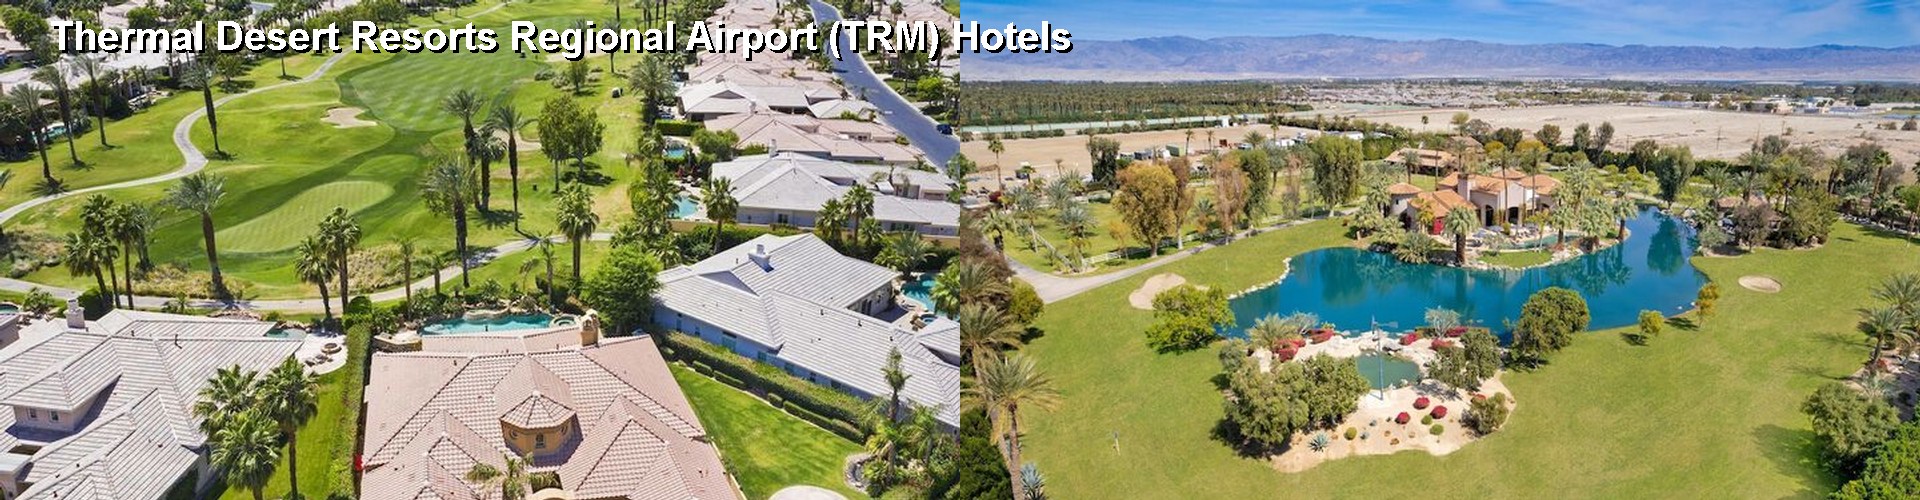 5 Best Hotels near Thermal Desert Resorts Regional Airport (TRM)